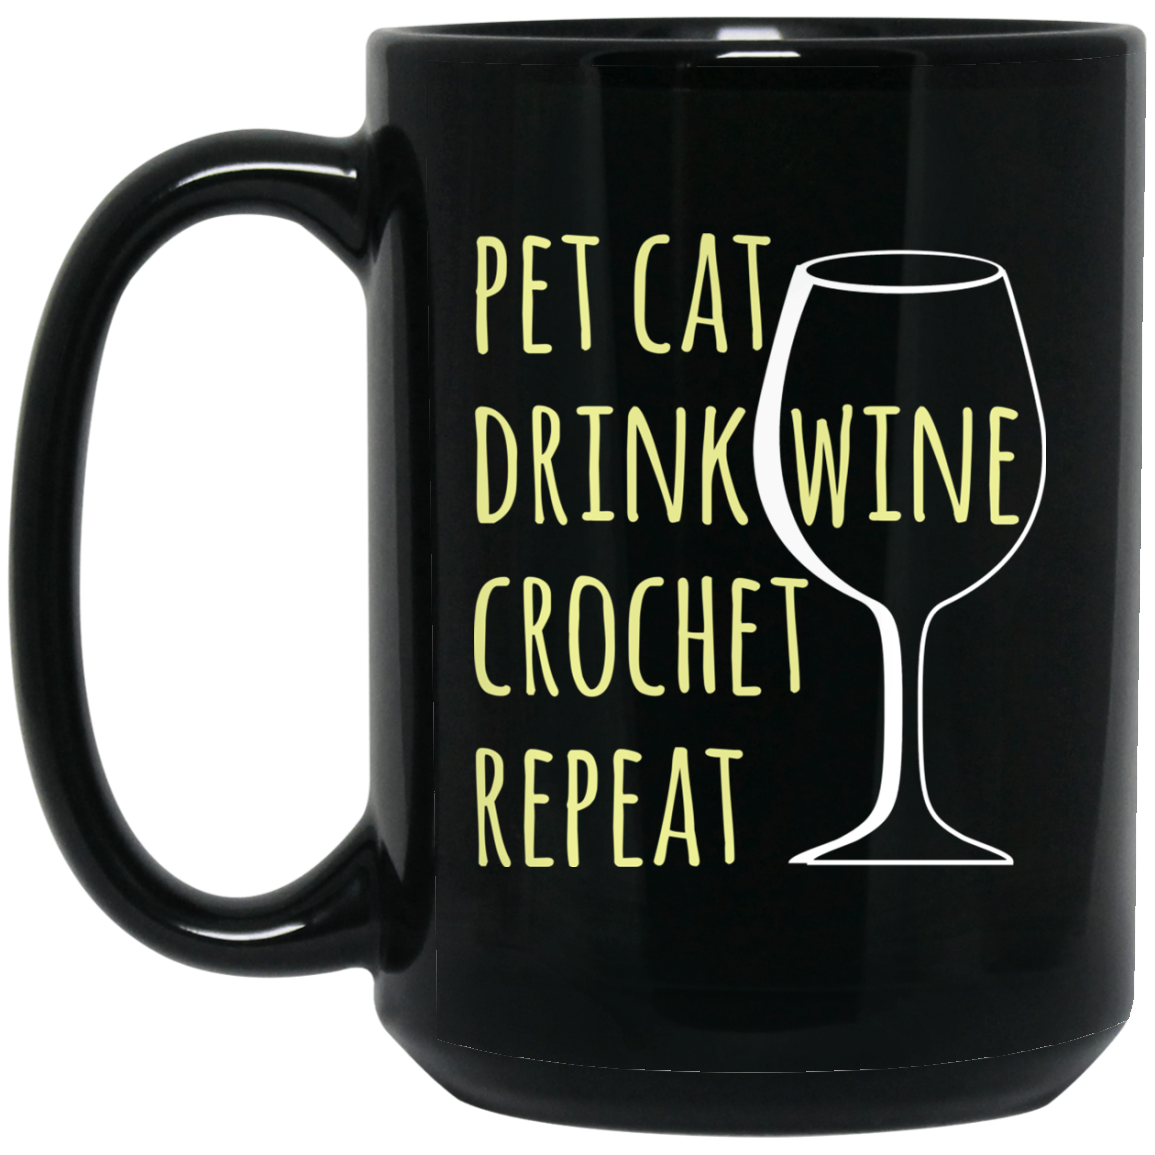 Pet Cat-Drink Wine-Crochet Black Mugs